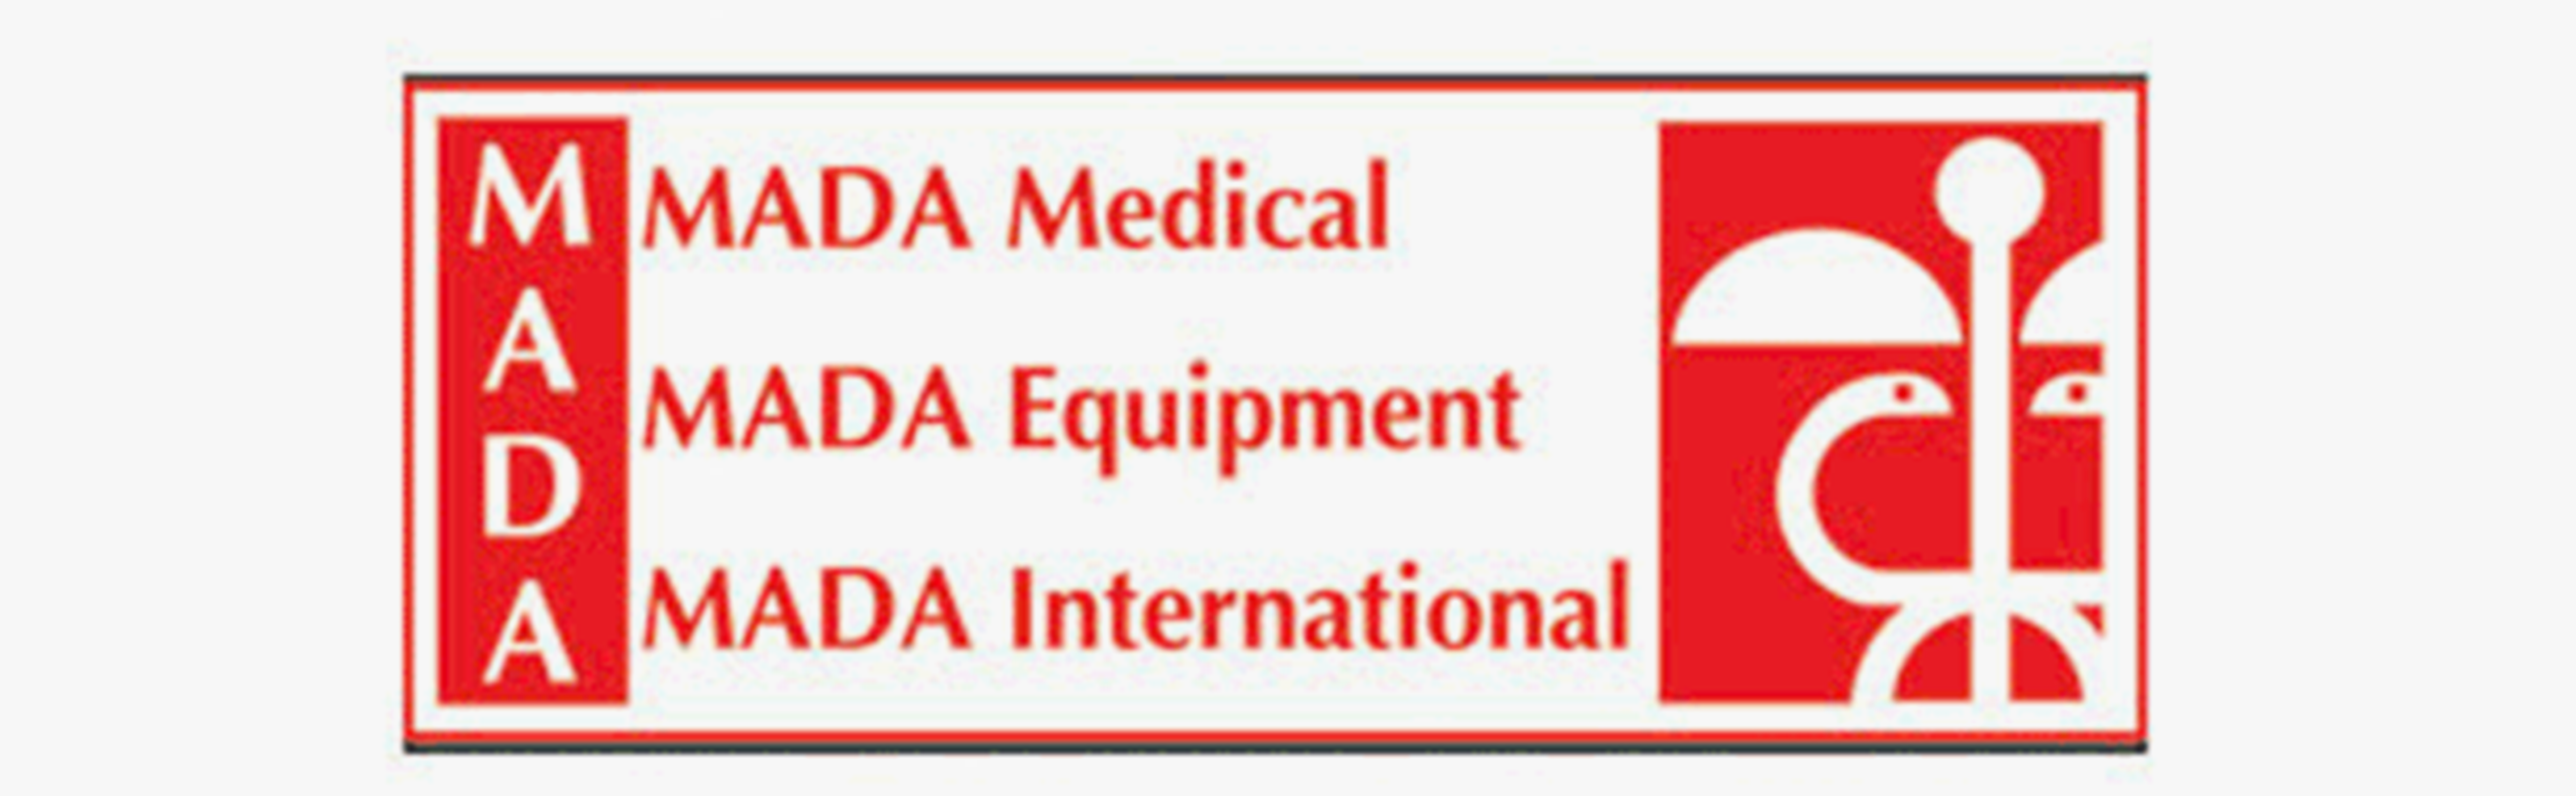 MADA Medical Products, Inc.